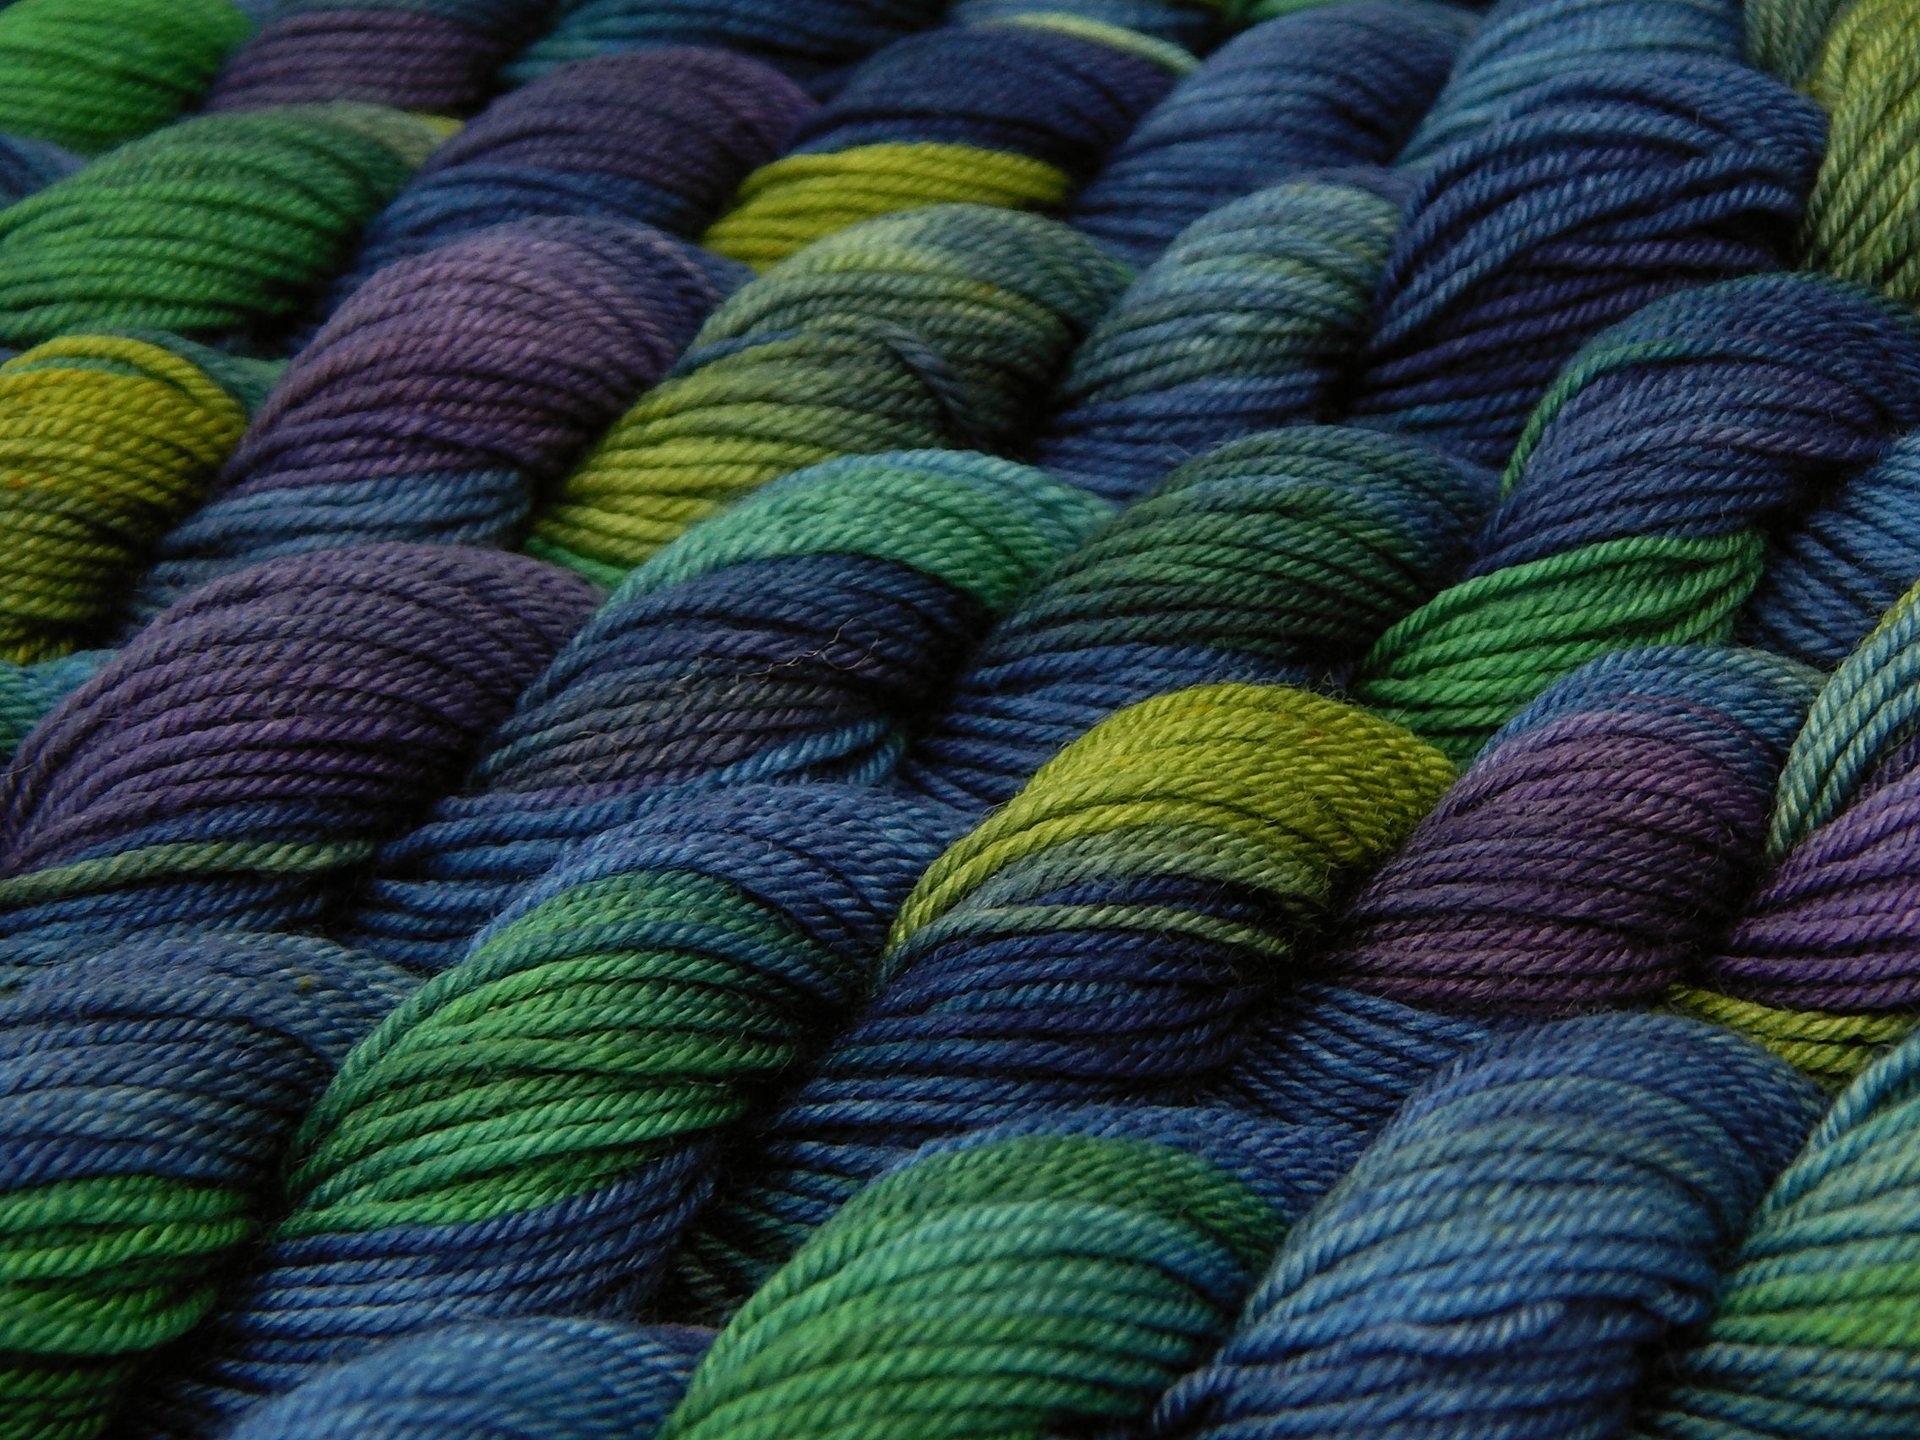 Sock Yarn Fingering Weight Mini Skeins, Hand Dyed Yarn, Sock Weight 4 Ply Superwash Merino Wool - Ink Multi - Indie Dyed Blue Green Purple